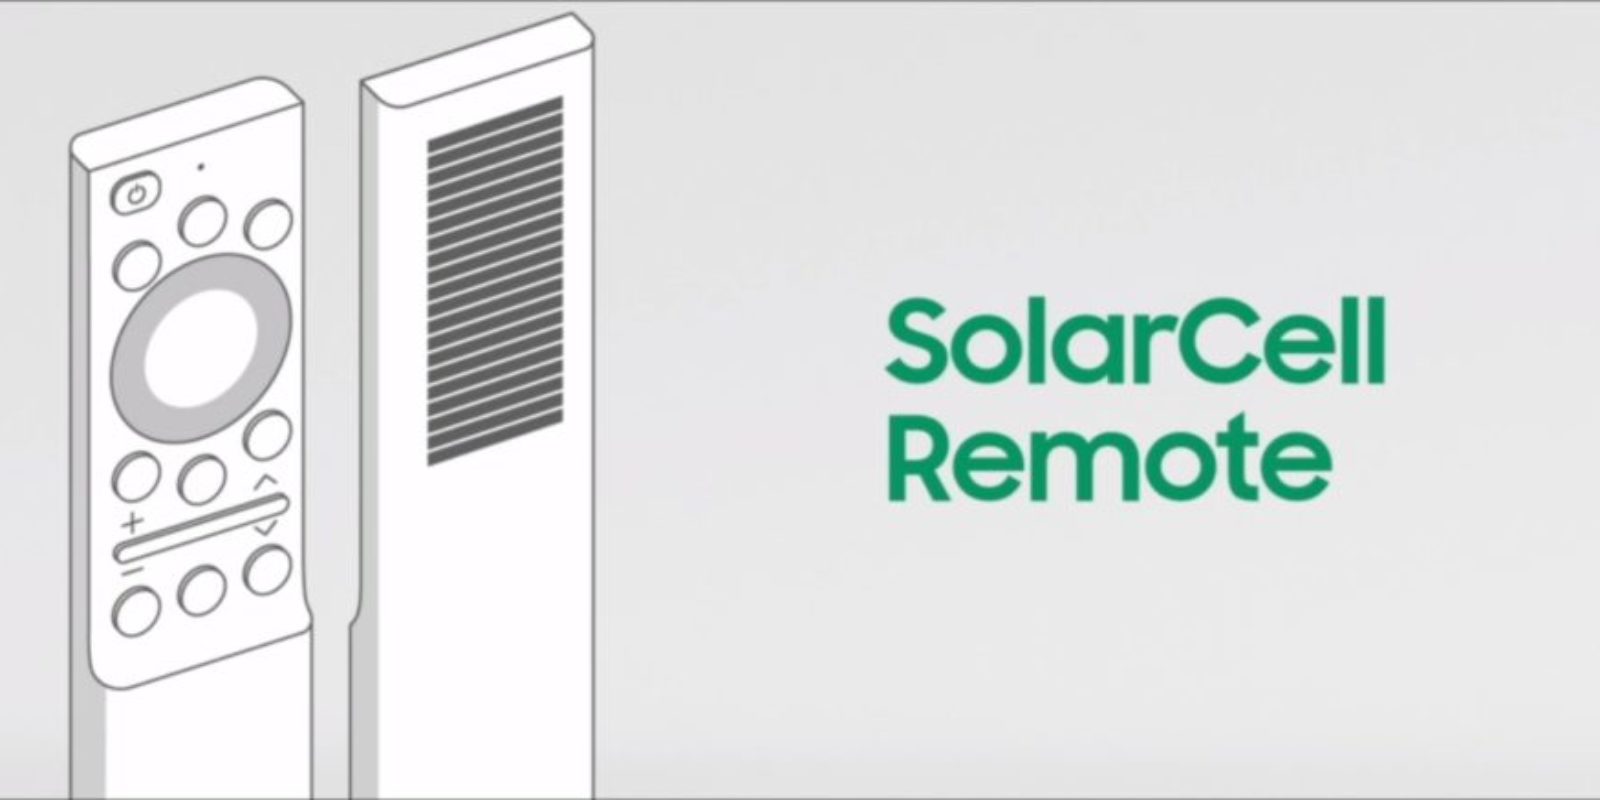 SolarCell Remote